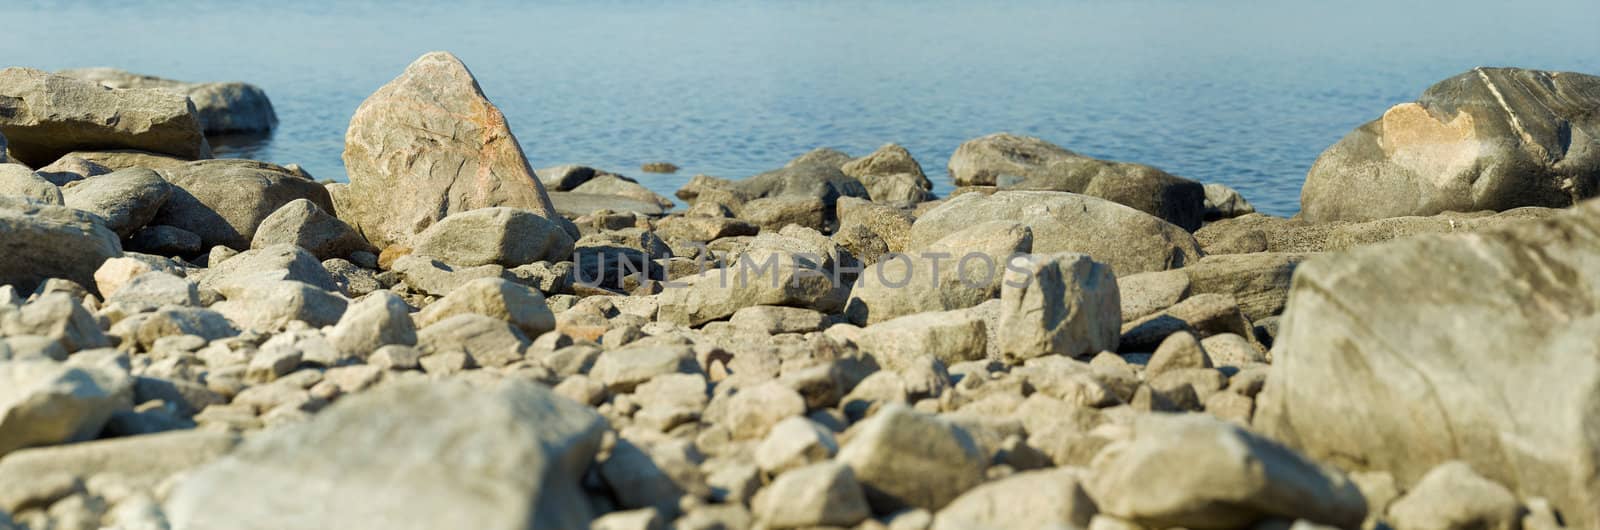 Landscape - northern cold stony coast of lake